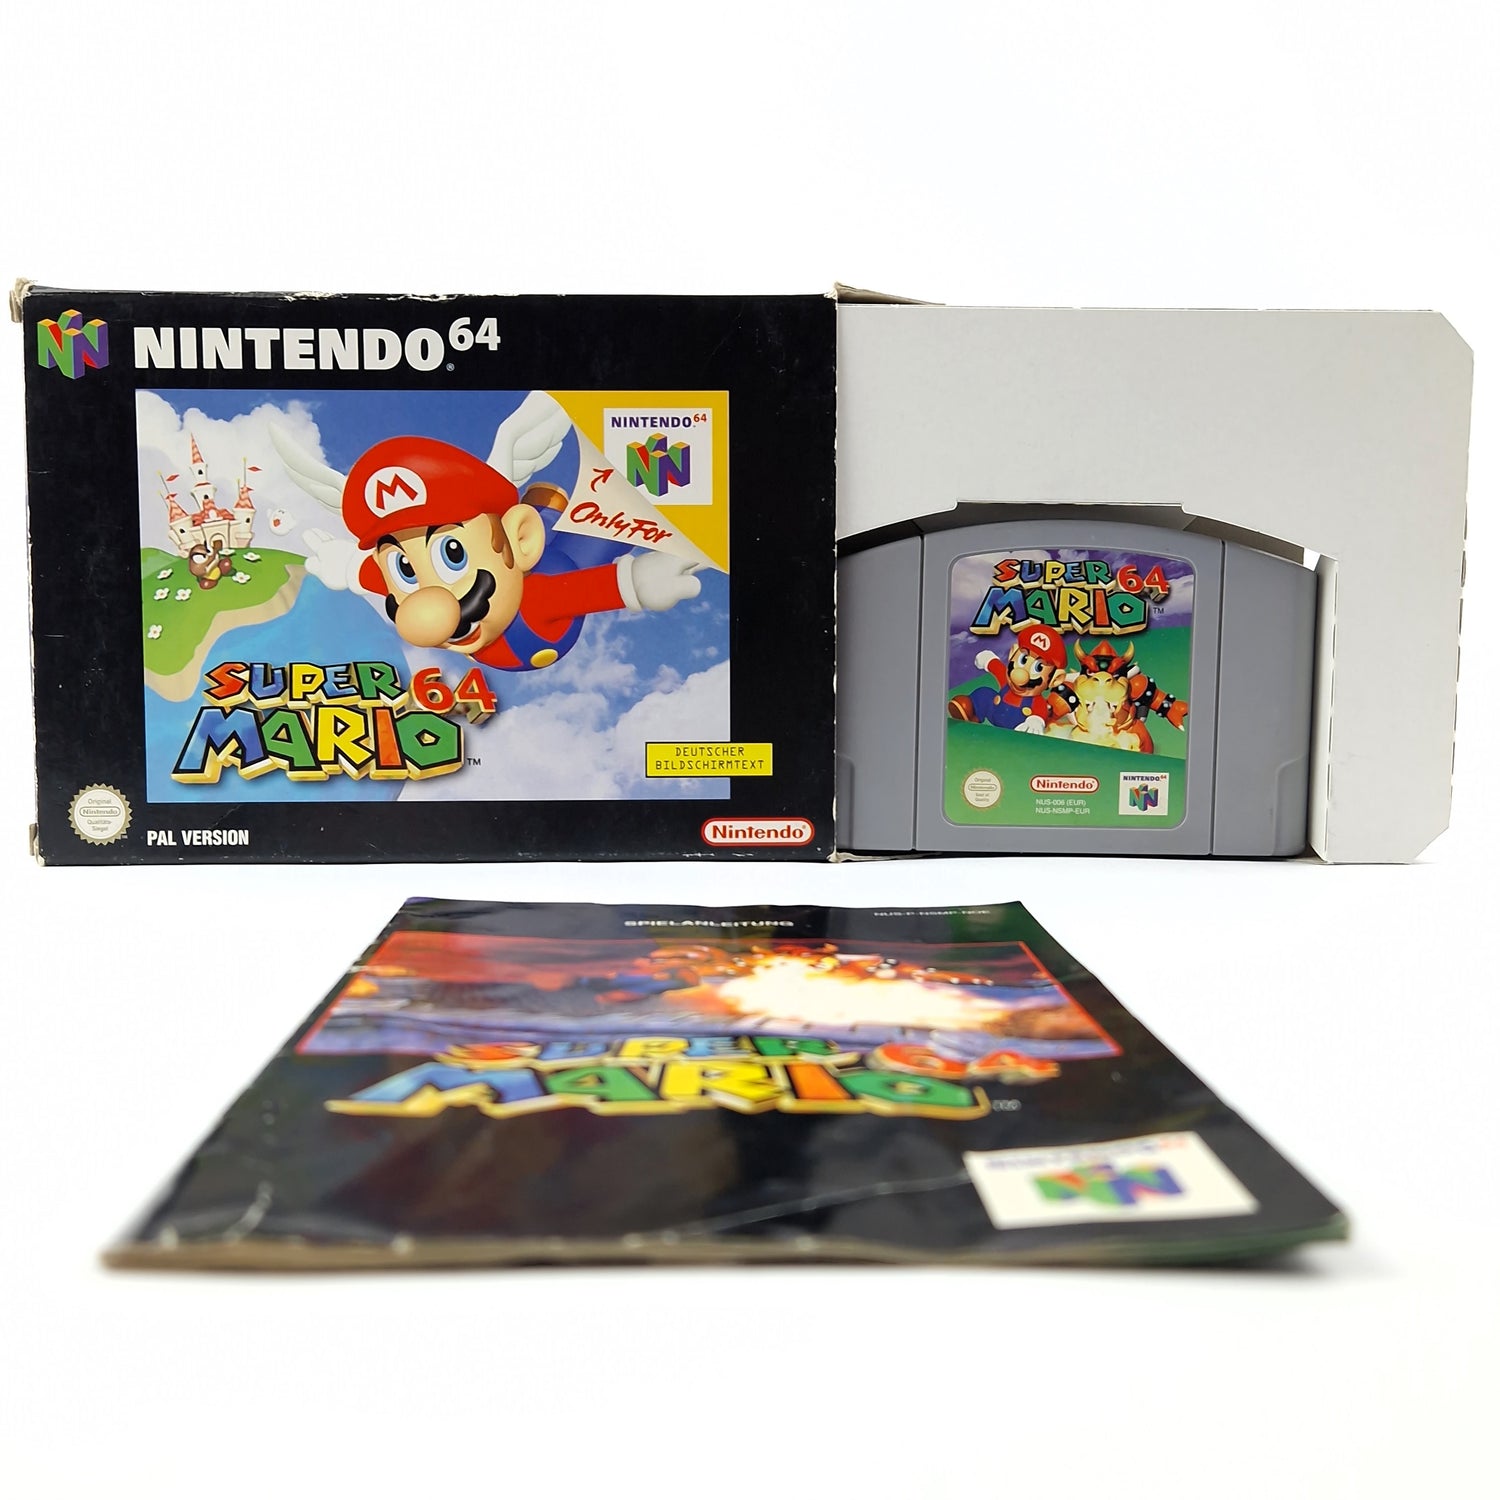 Nintendo 64 Game: Super Mario 64 - Module Instructions OVP cib / N64 PAL